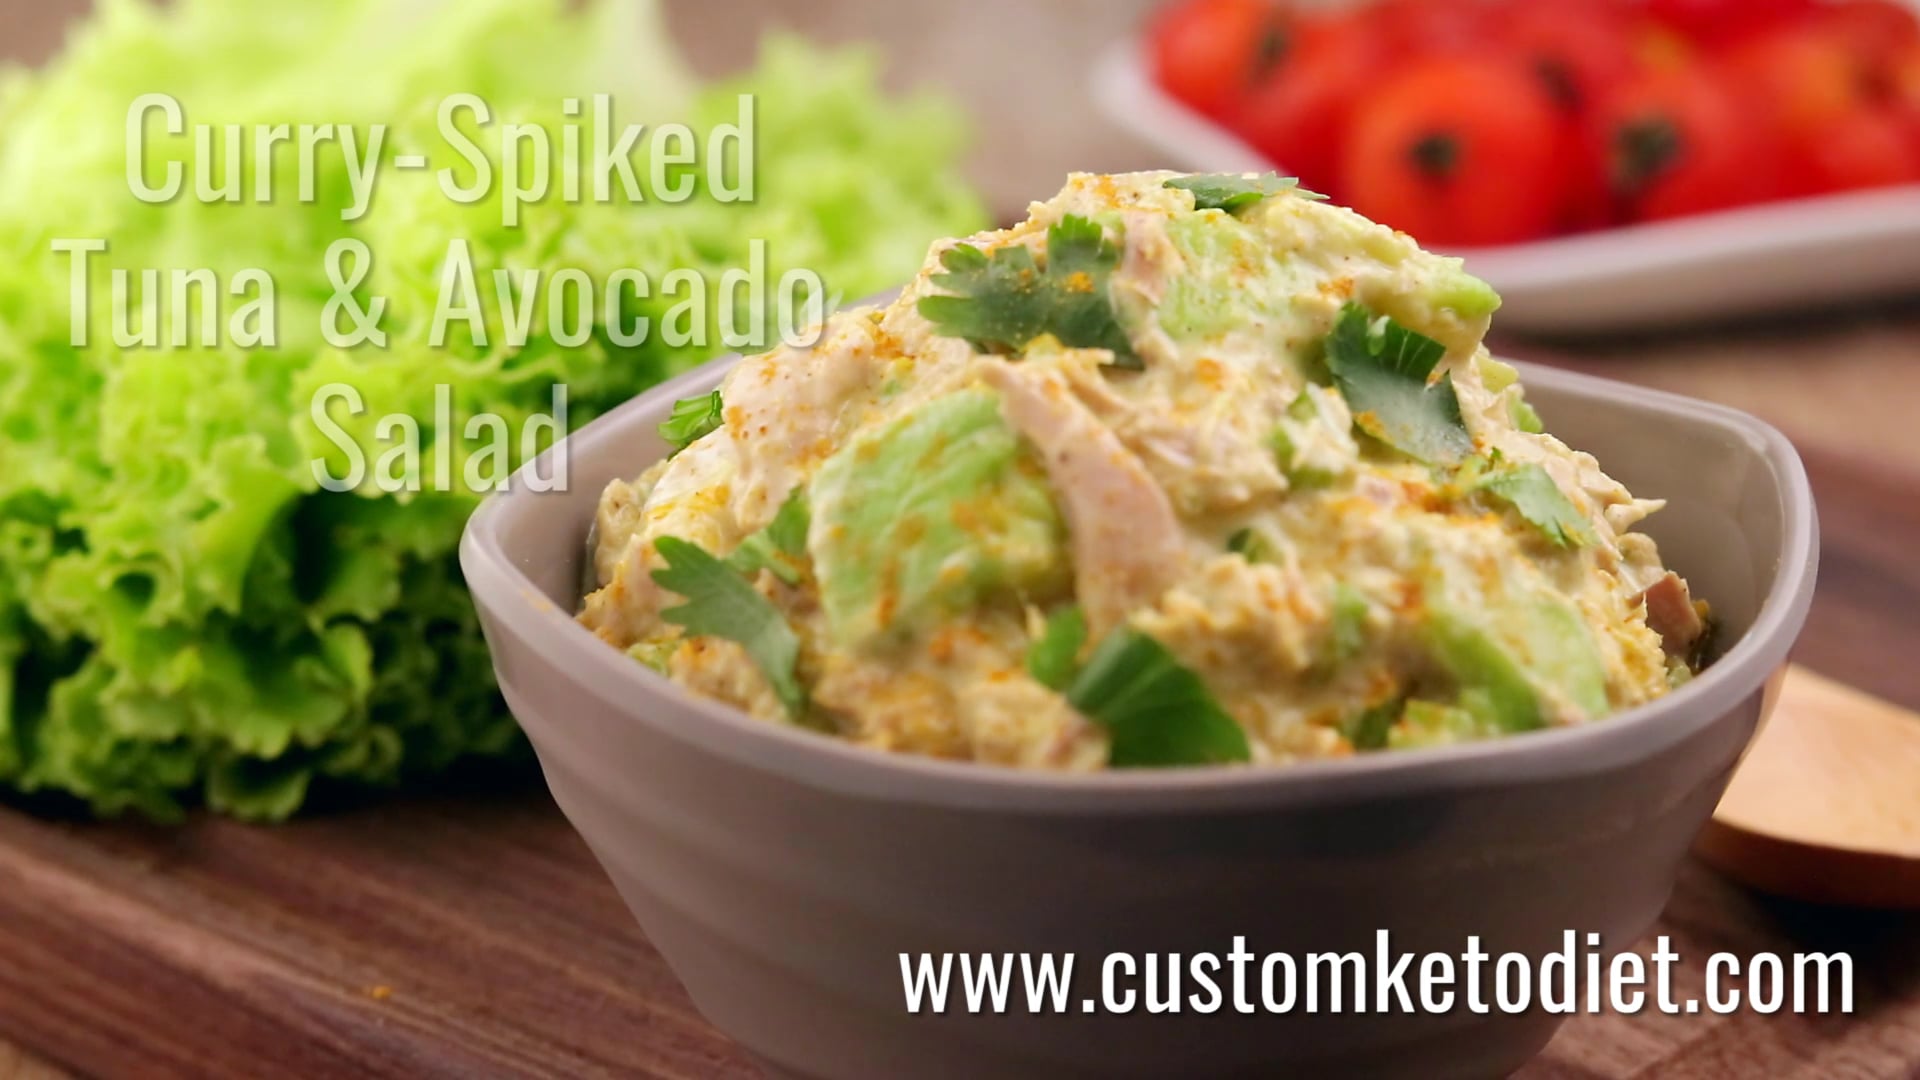 Keto Curry Spiked Tuna and Avocado Salad Recipe 2021